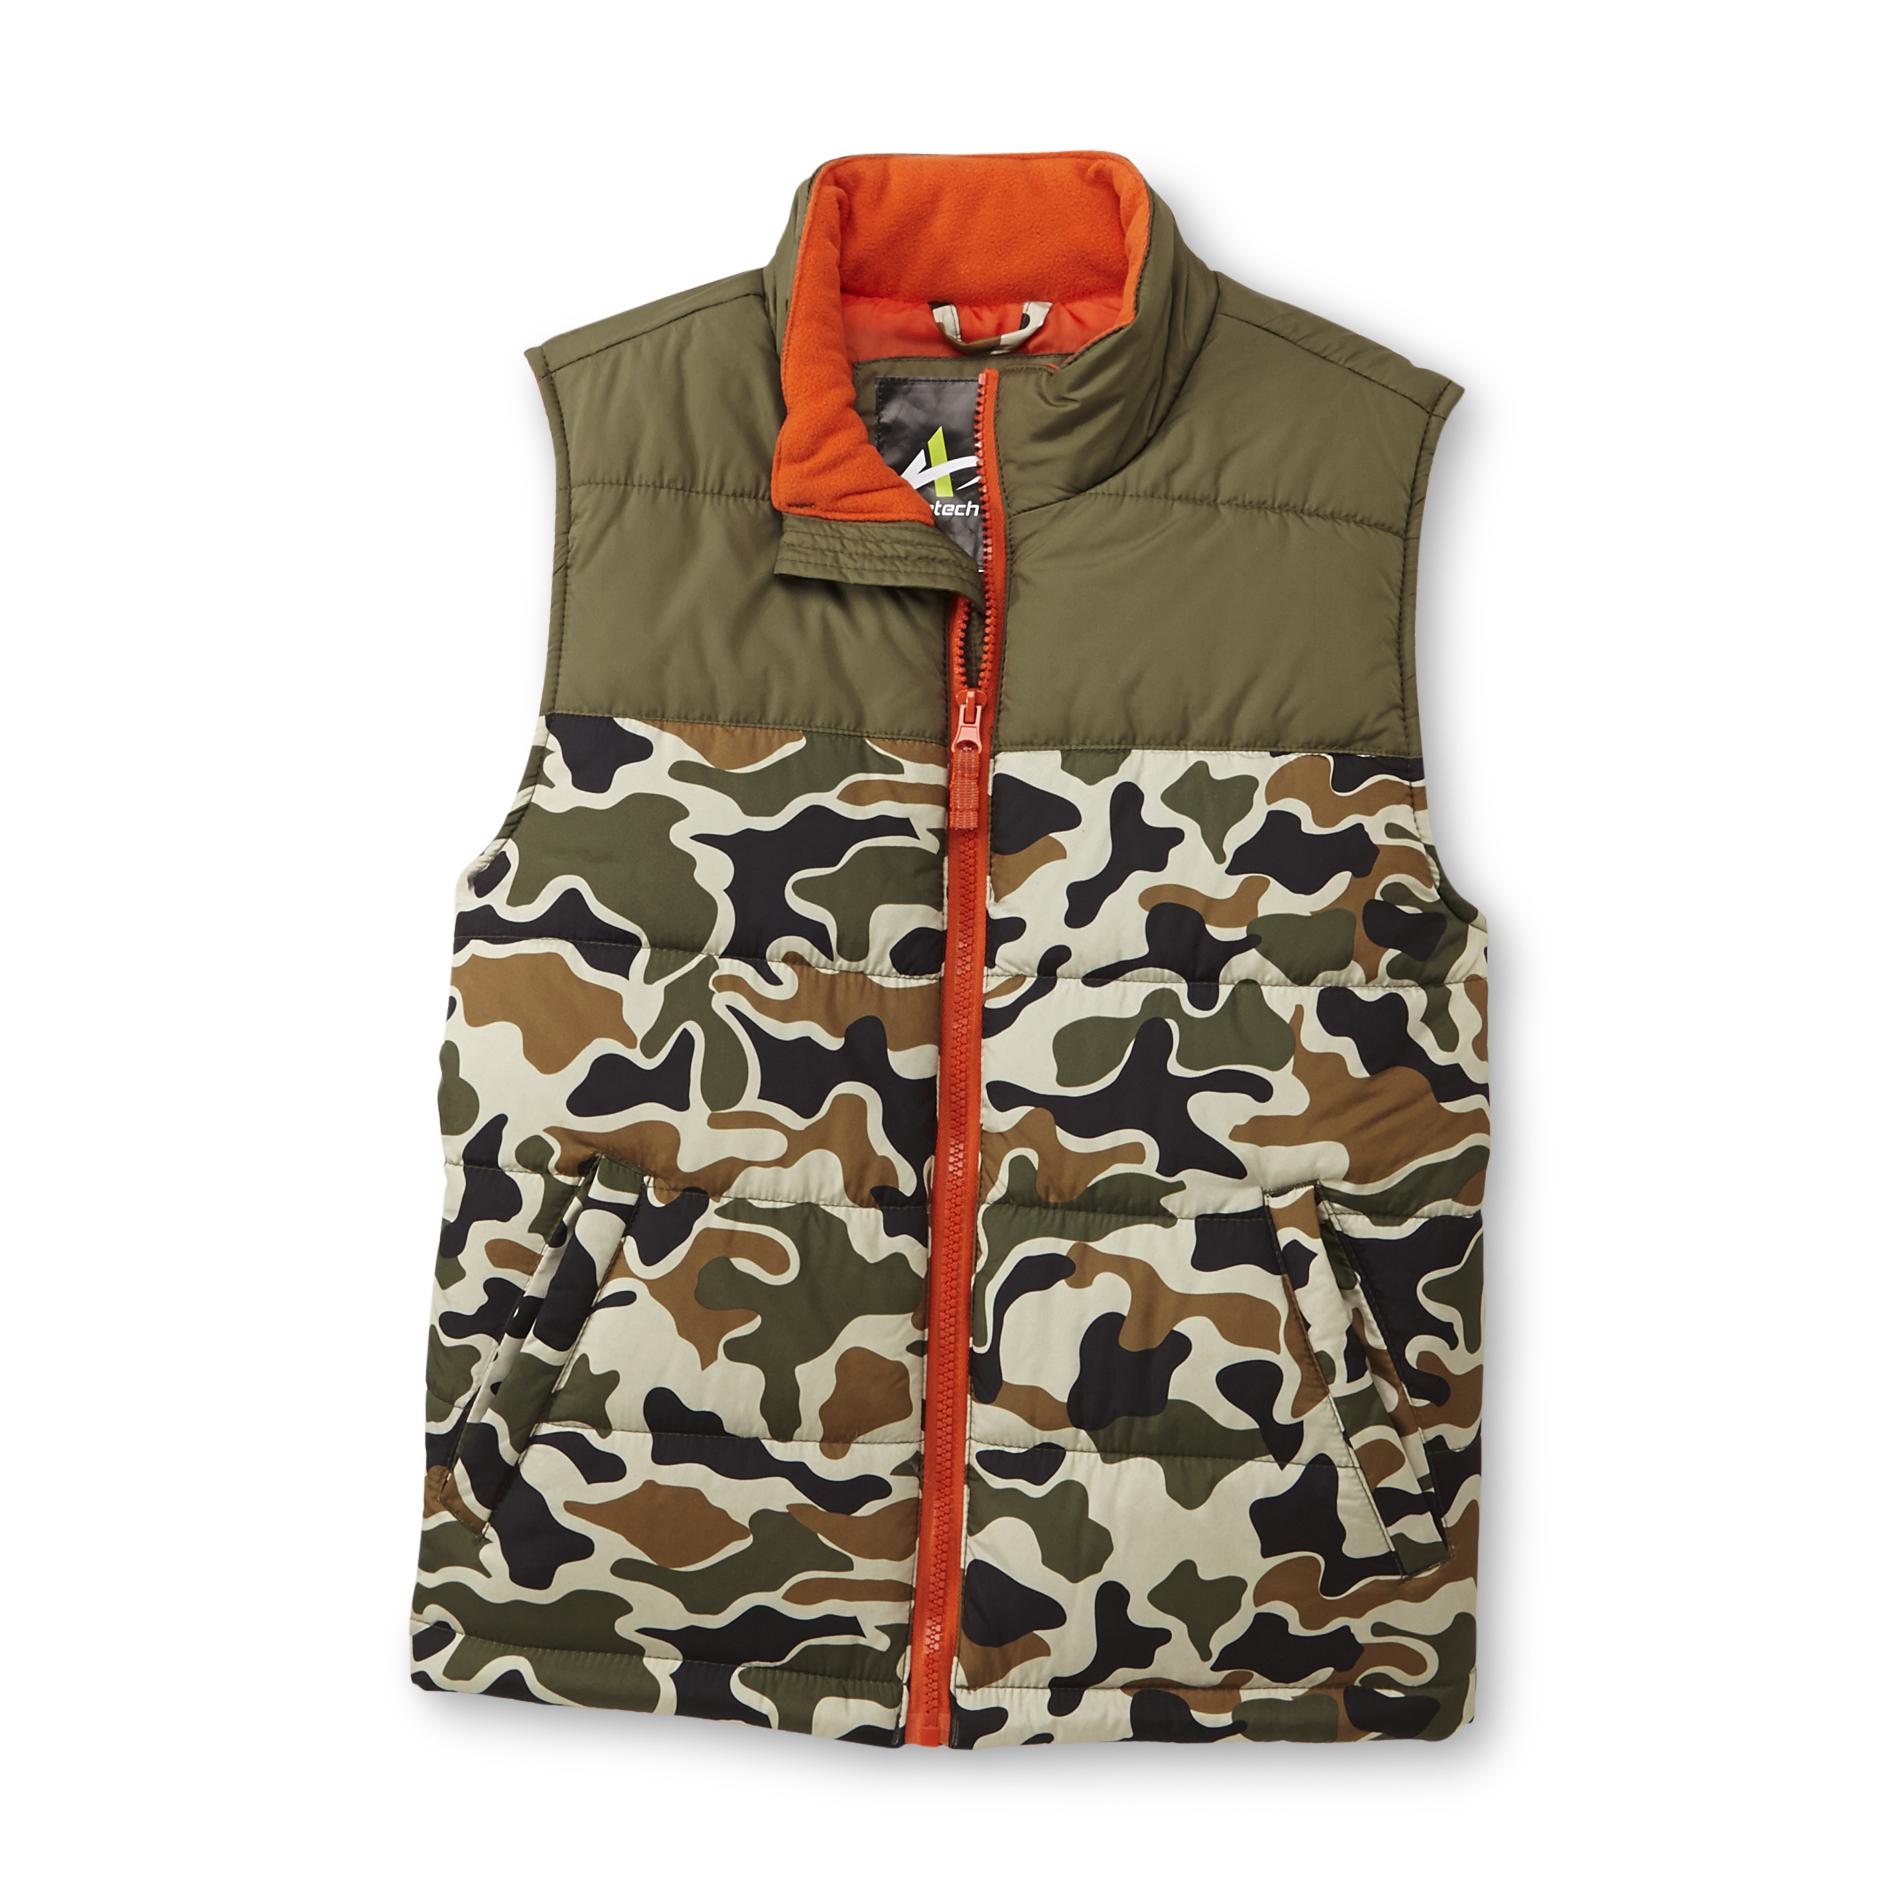 Athletech Boy's Puffer Vest - Camouflage